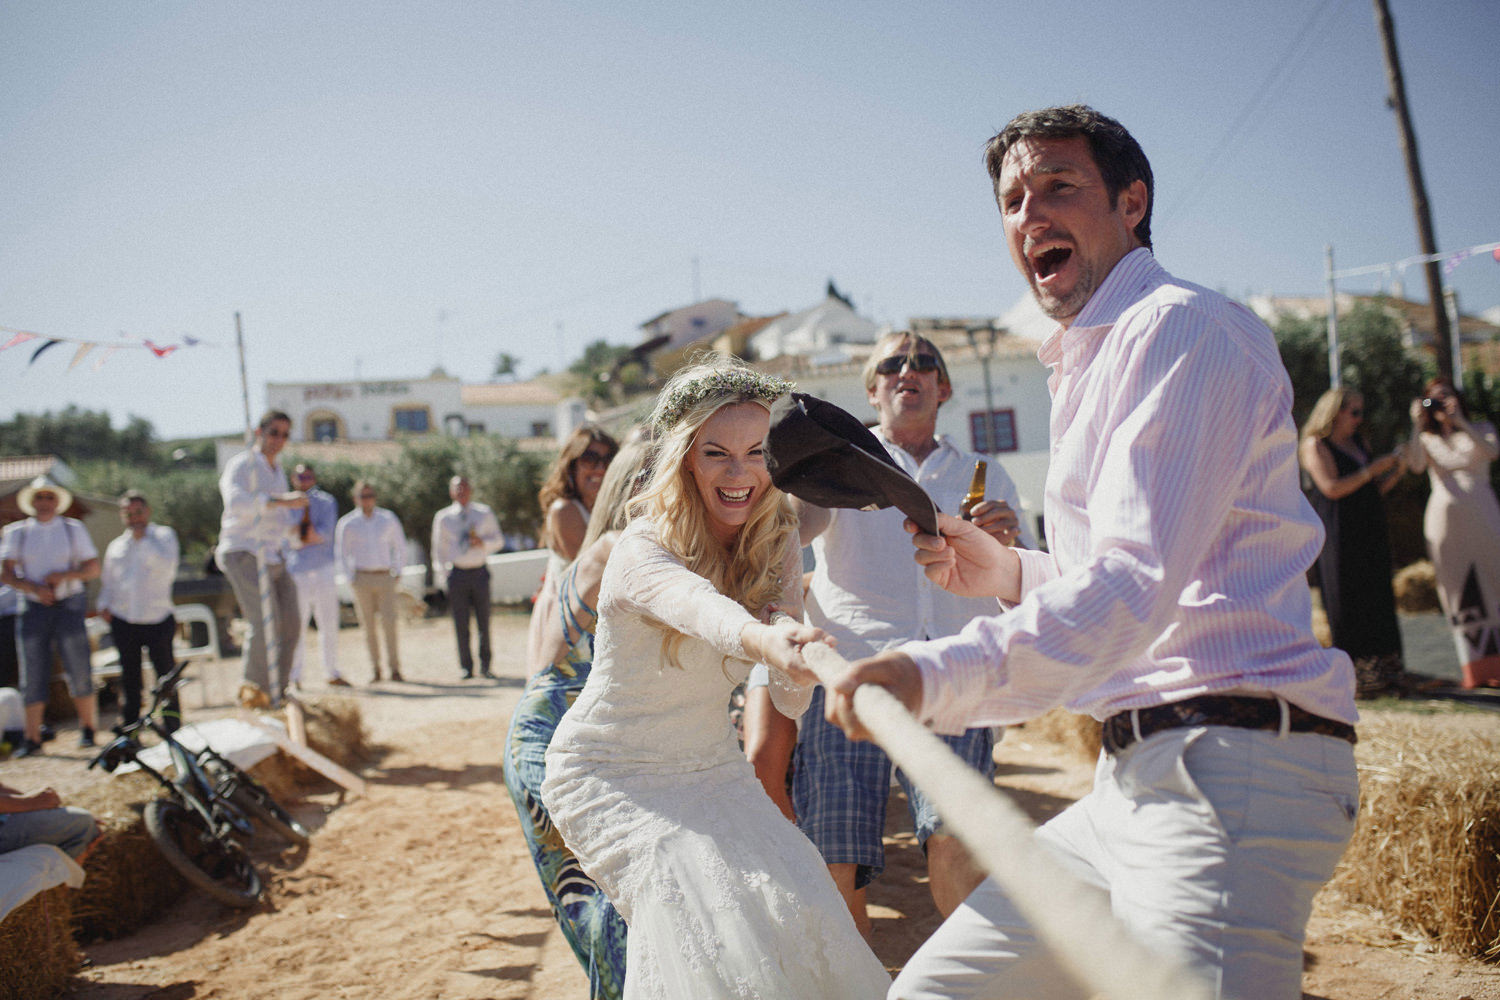 fun fair wedding aldeira da pedralva portugal wedding photographer